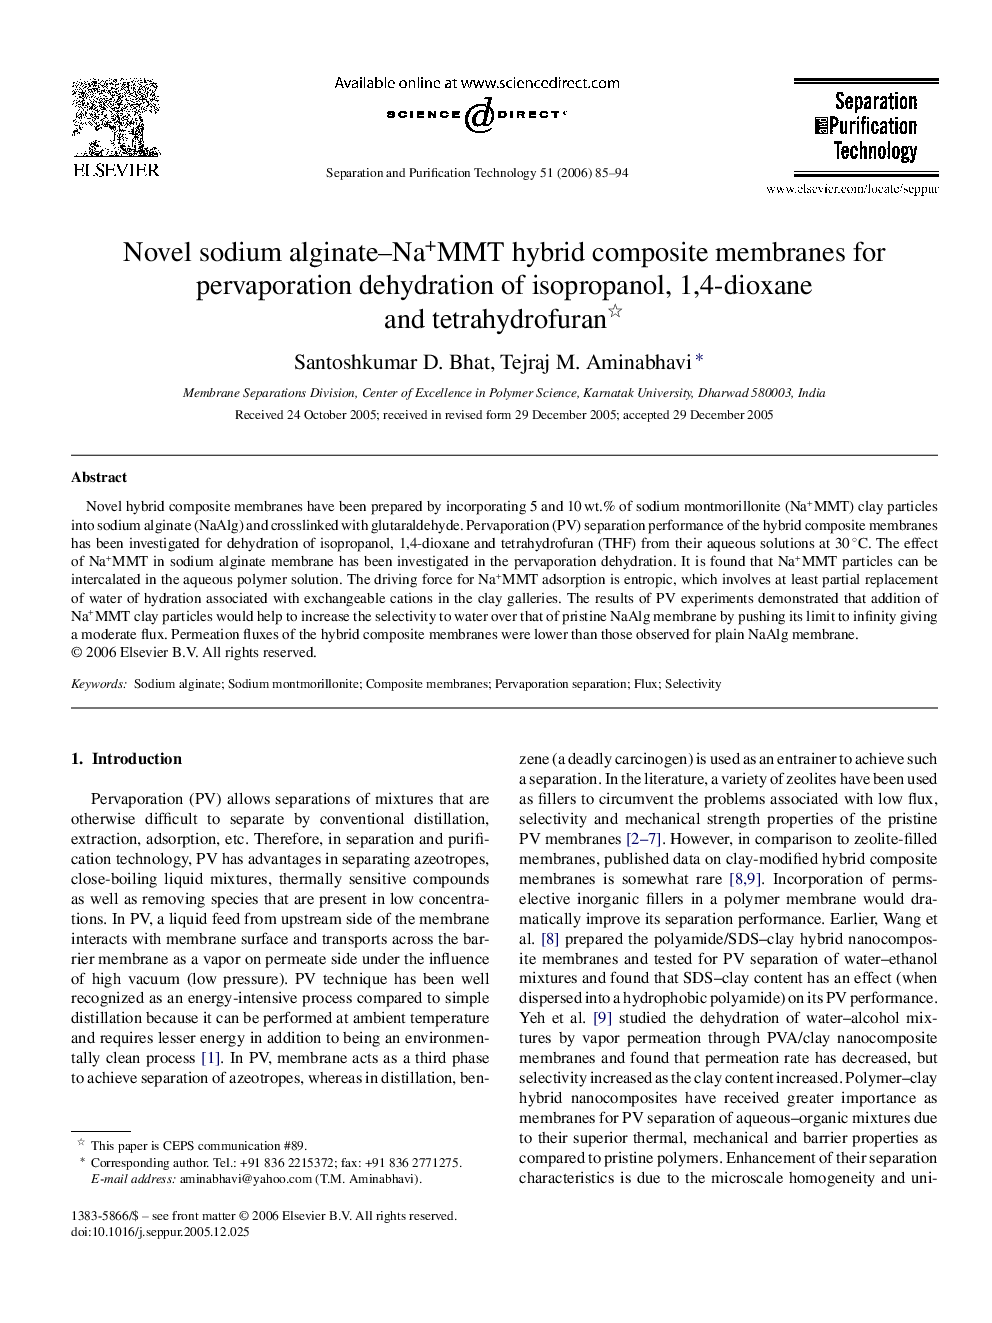 Novel sodium alginate–Na+MMT hybrid composite membranes for pervaporation dehydration of isopropanol, 1,4-dioxane and tetrahydrofuran 